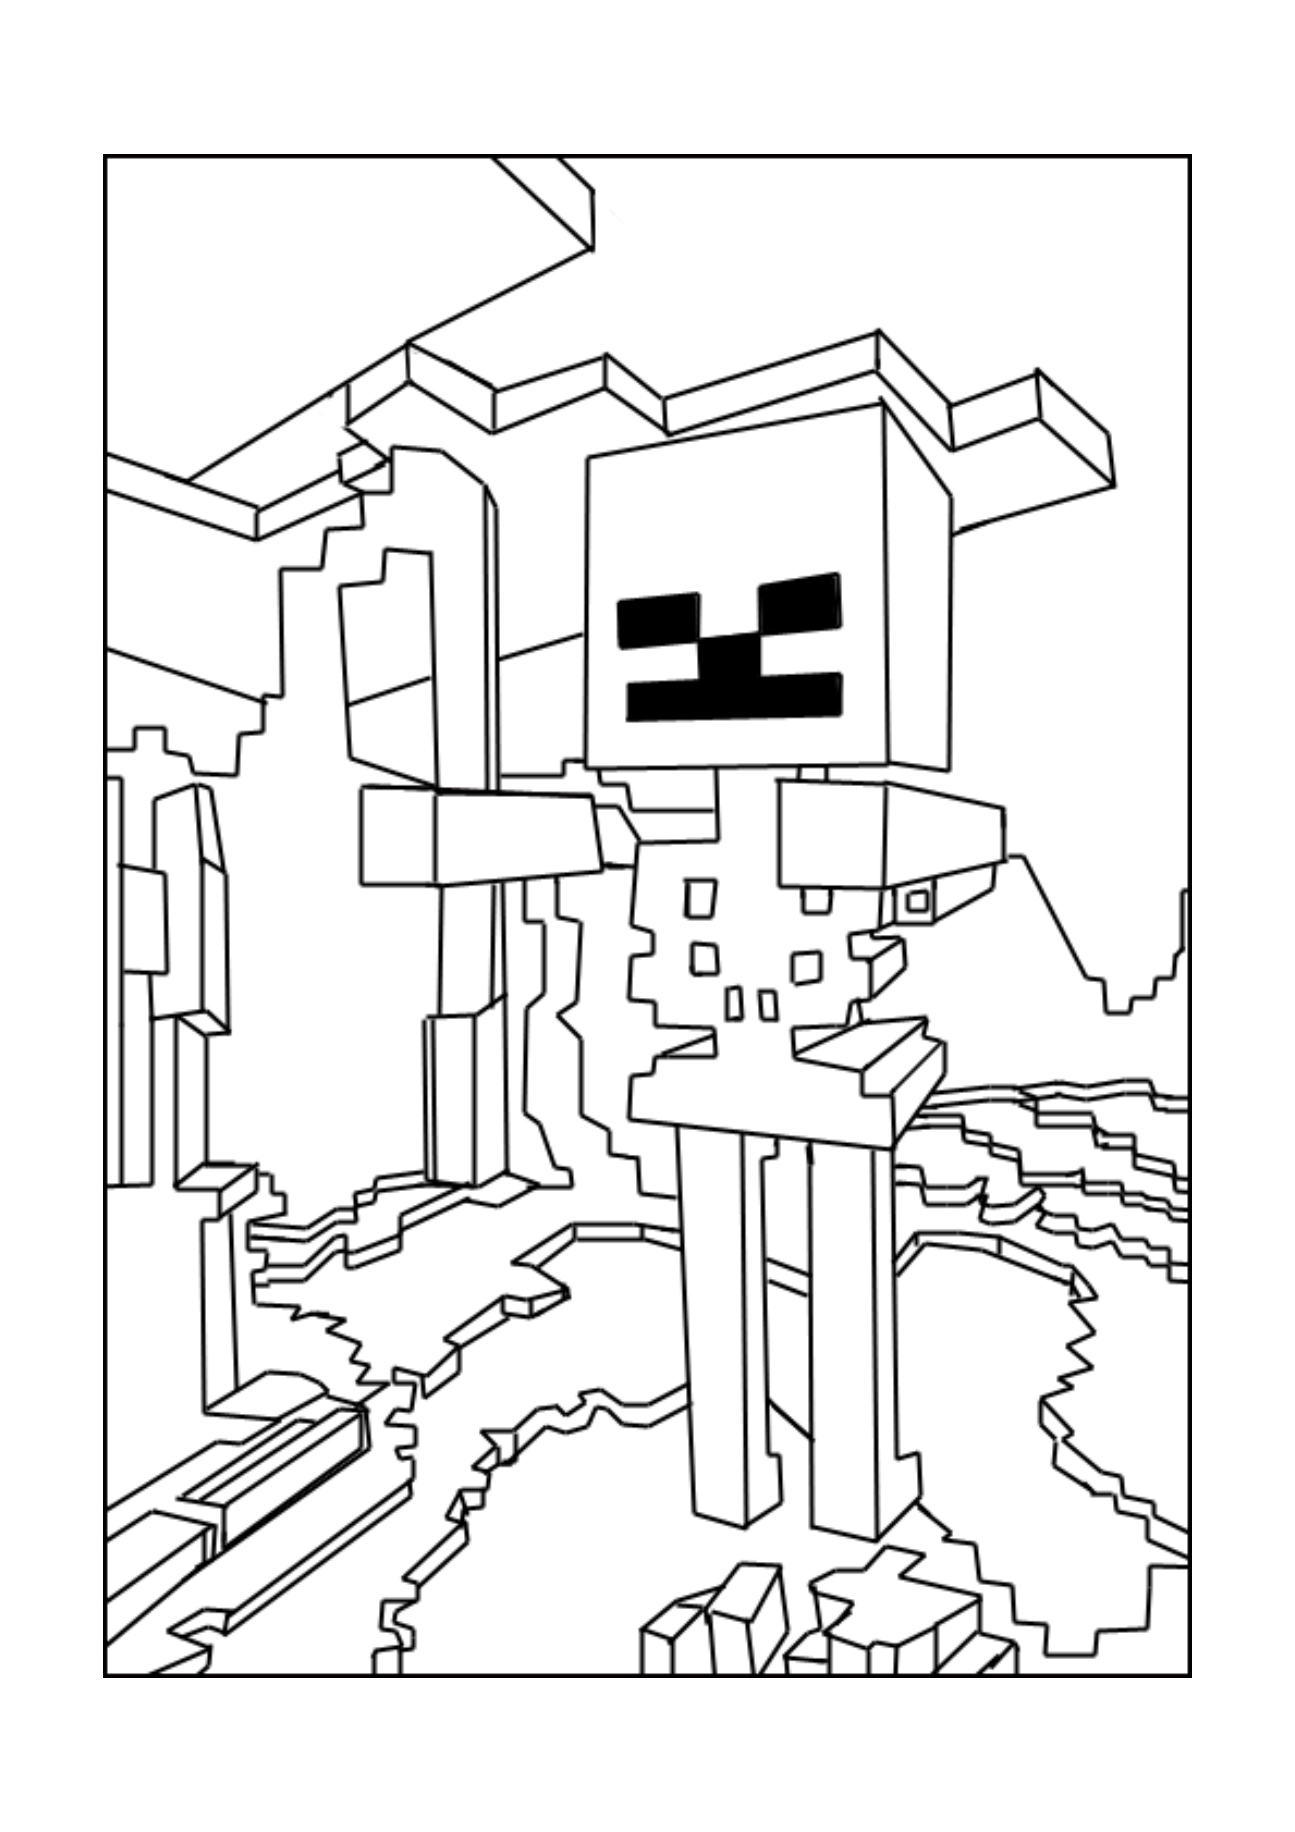 Download Art Drawing Black White Minecraft Pixel HQ PNG Image